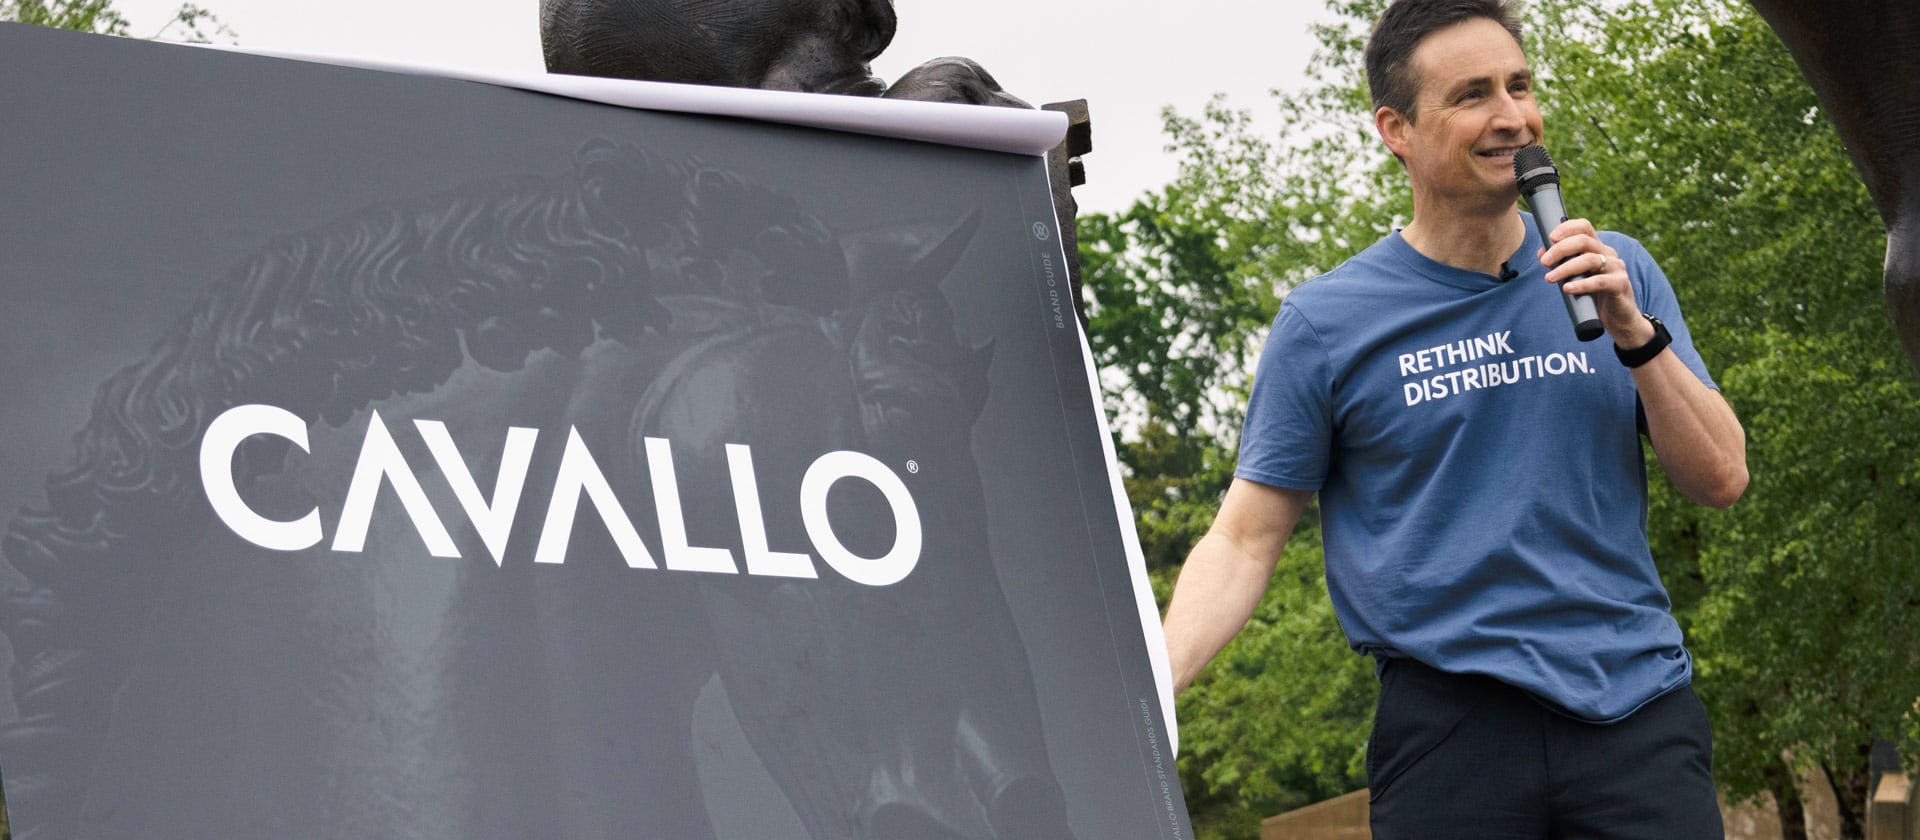 SalesPad rebrand to Cavallo